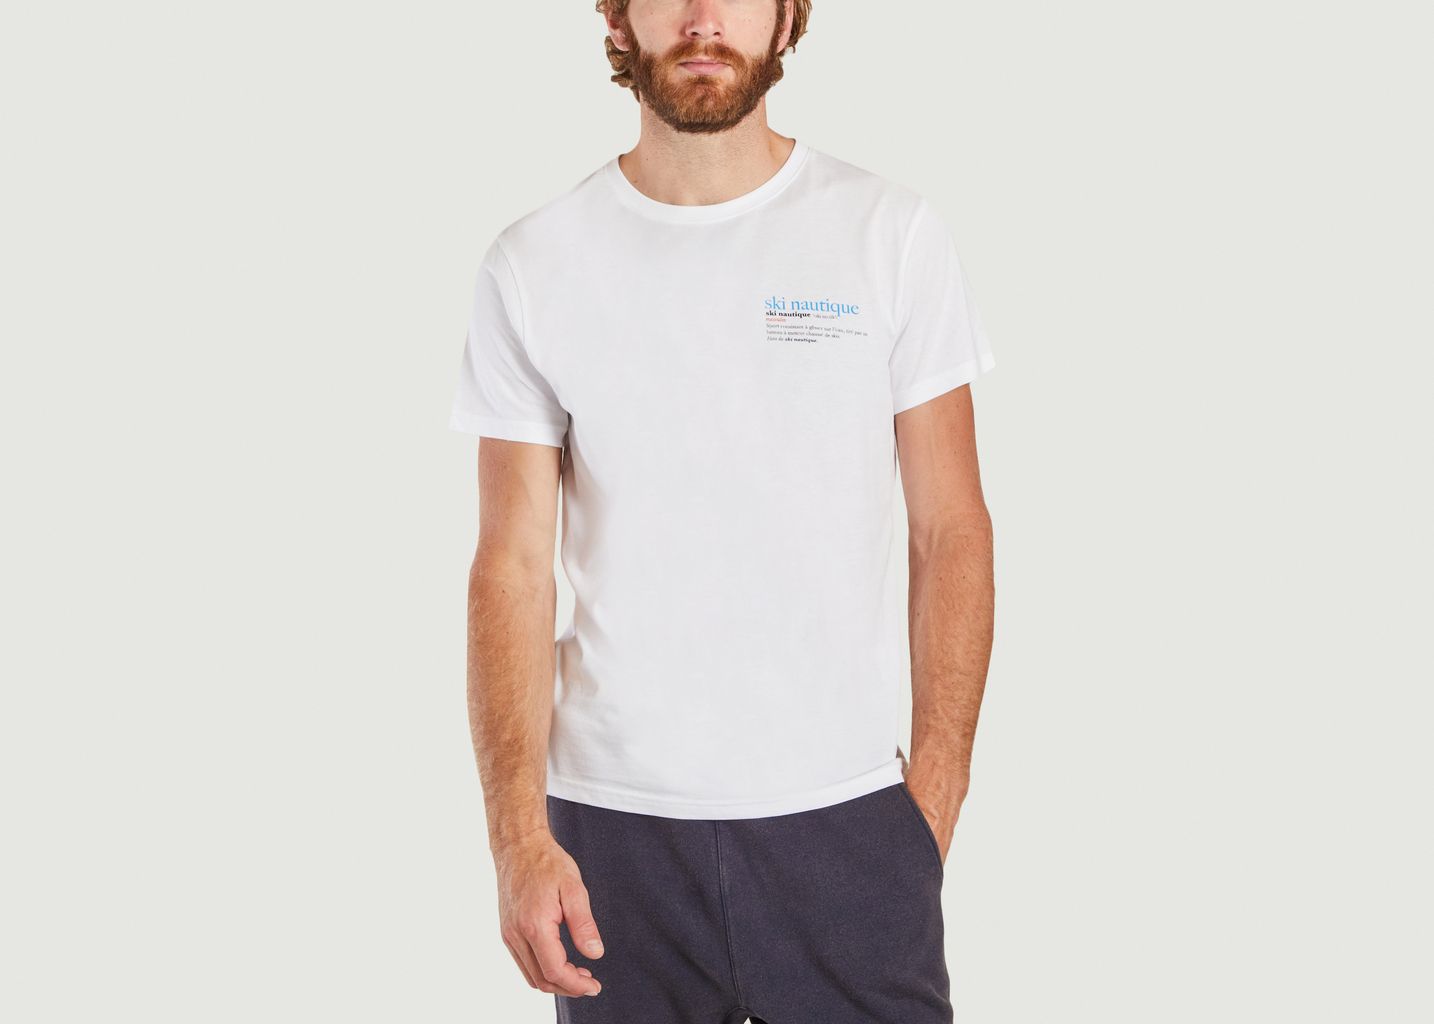 Dictio Ski Nautique T-shirt - 1789 Cala